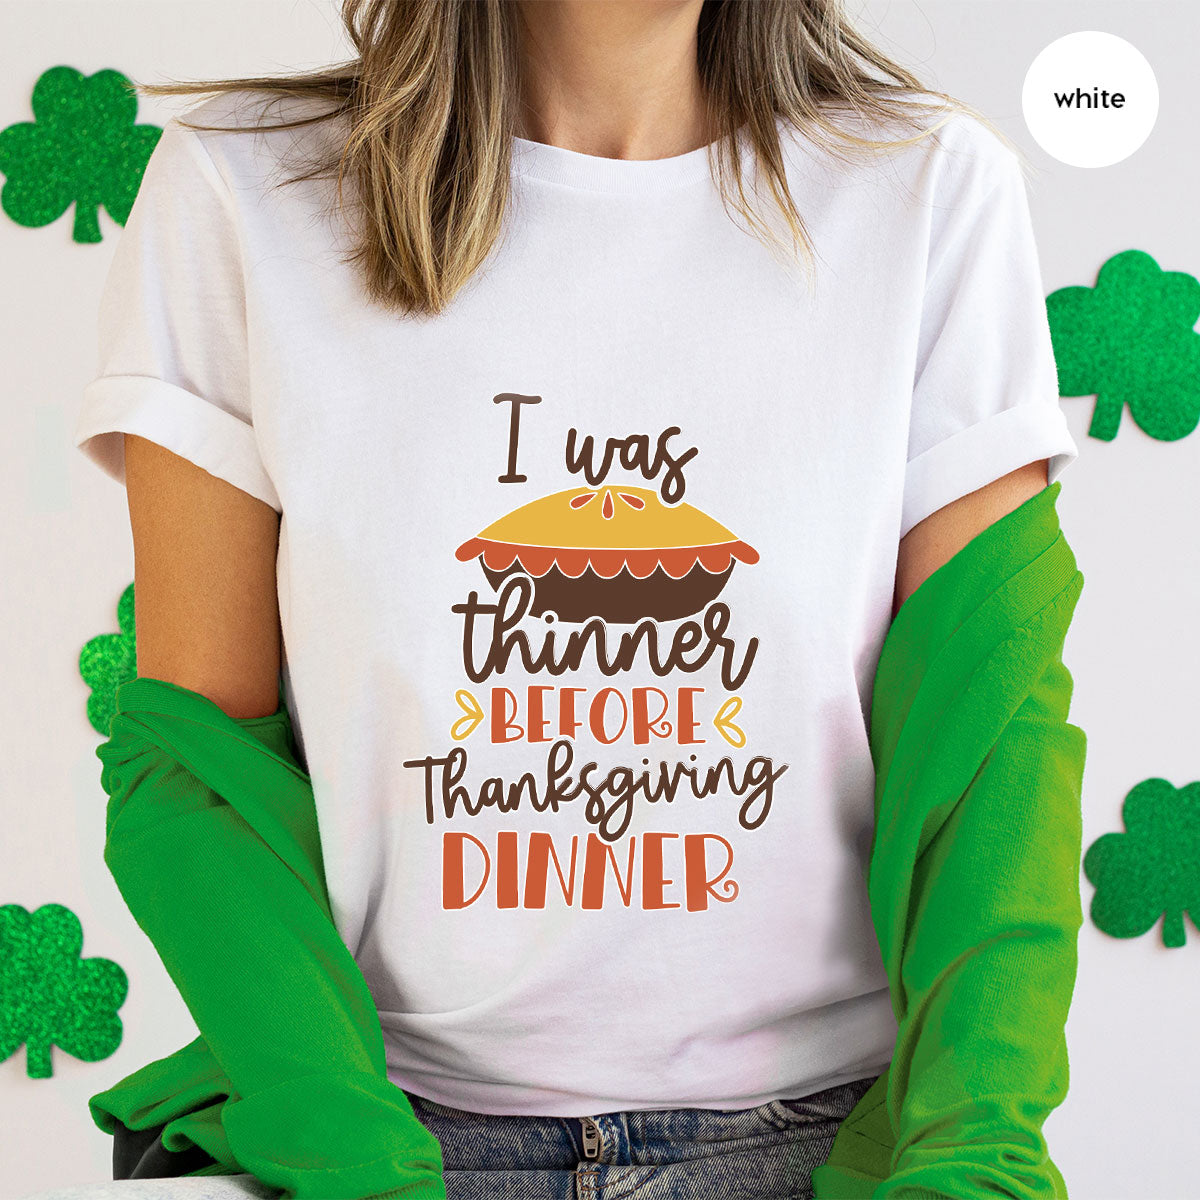 Funny Thanksgiving Shirt, Kids Fall Outfits, Matching Family Shirt, Thanksgiving Gifts, Pumpkin Pie Graphic Tees, Autumn Sweatshirt